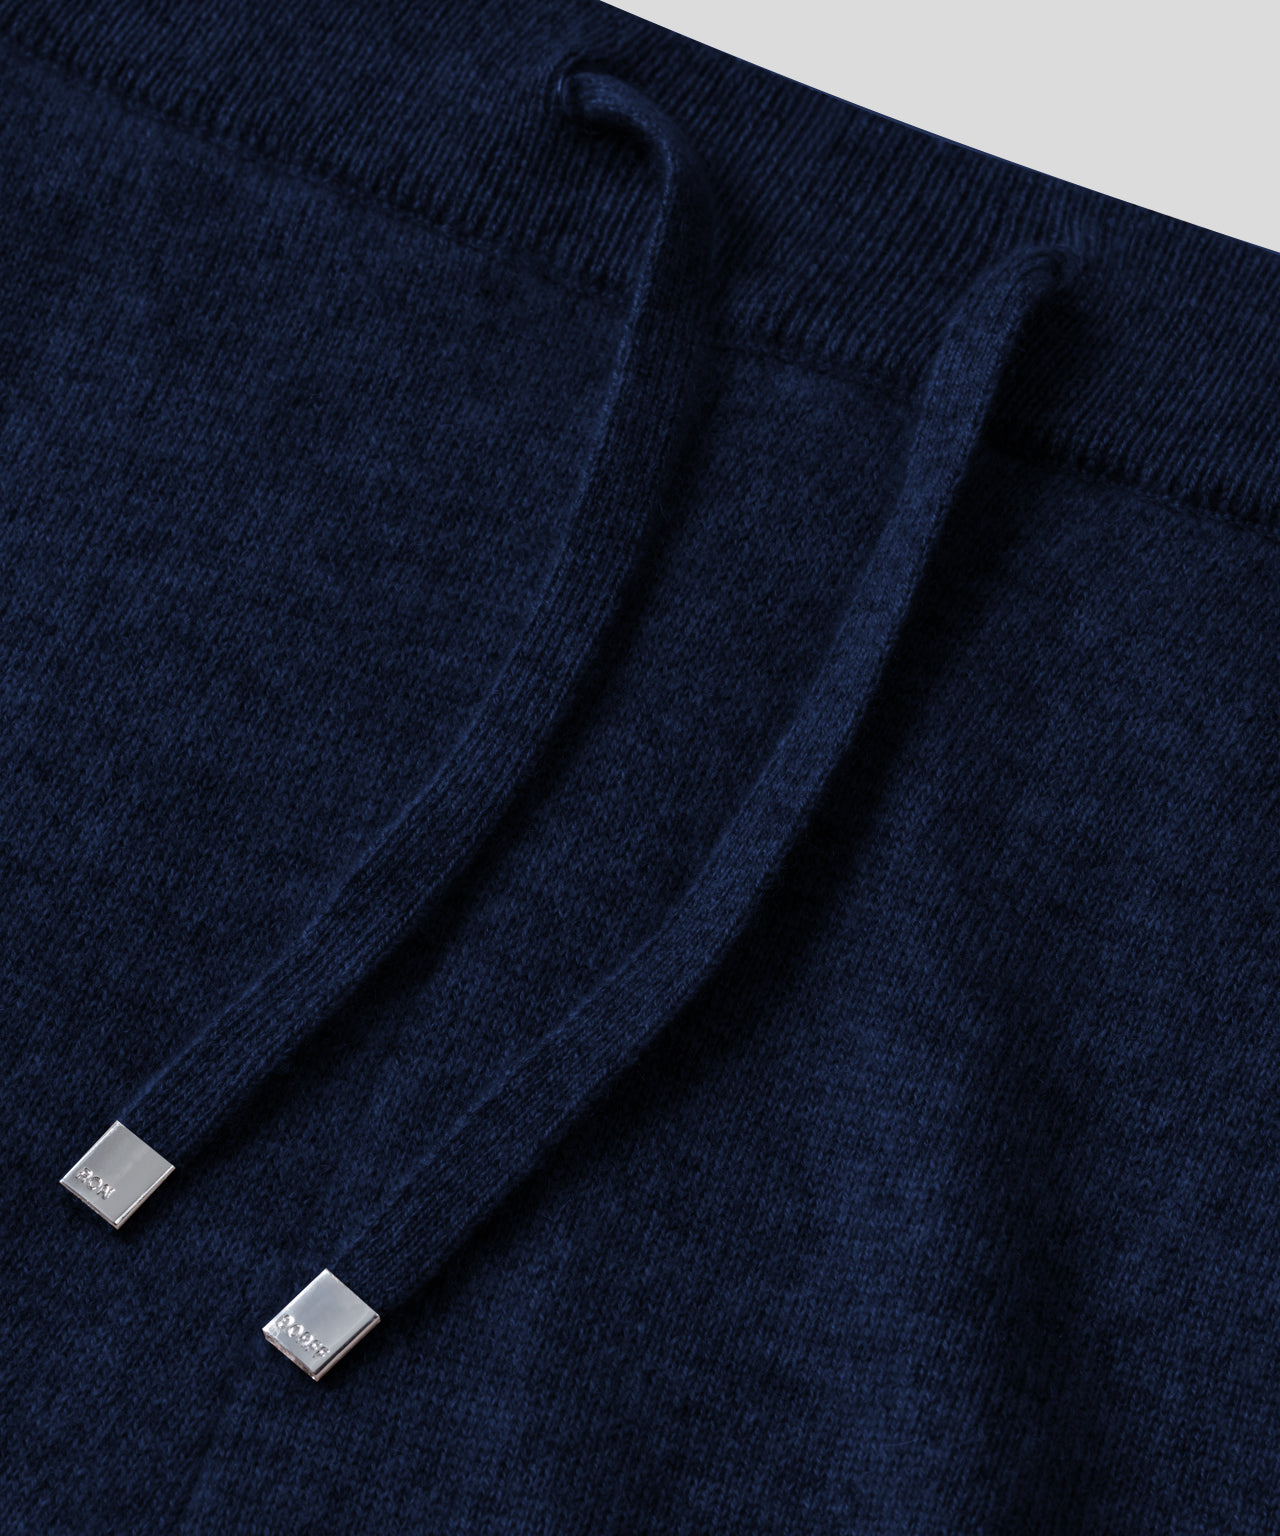 Pantalon avec poches en cachemire: Bleu marine